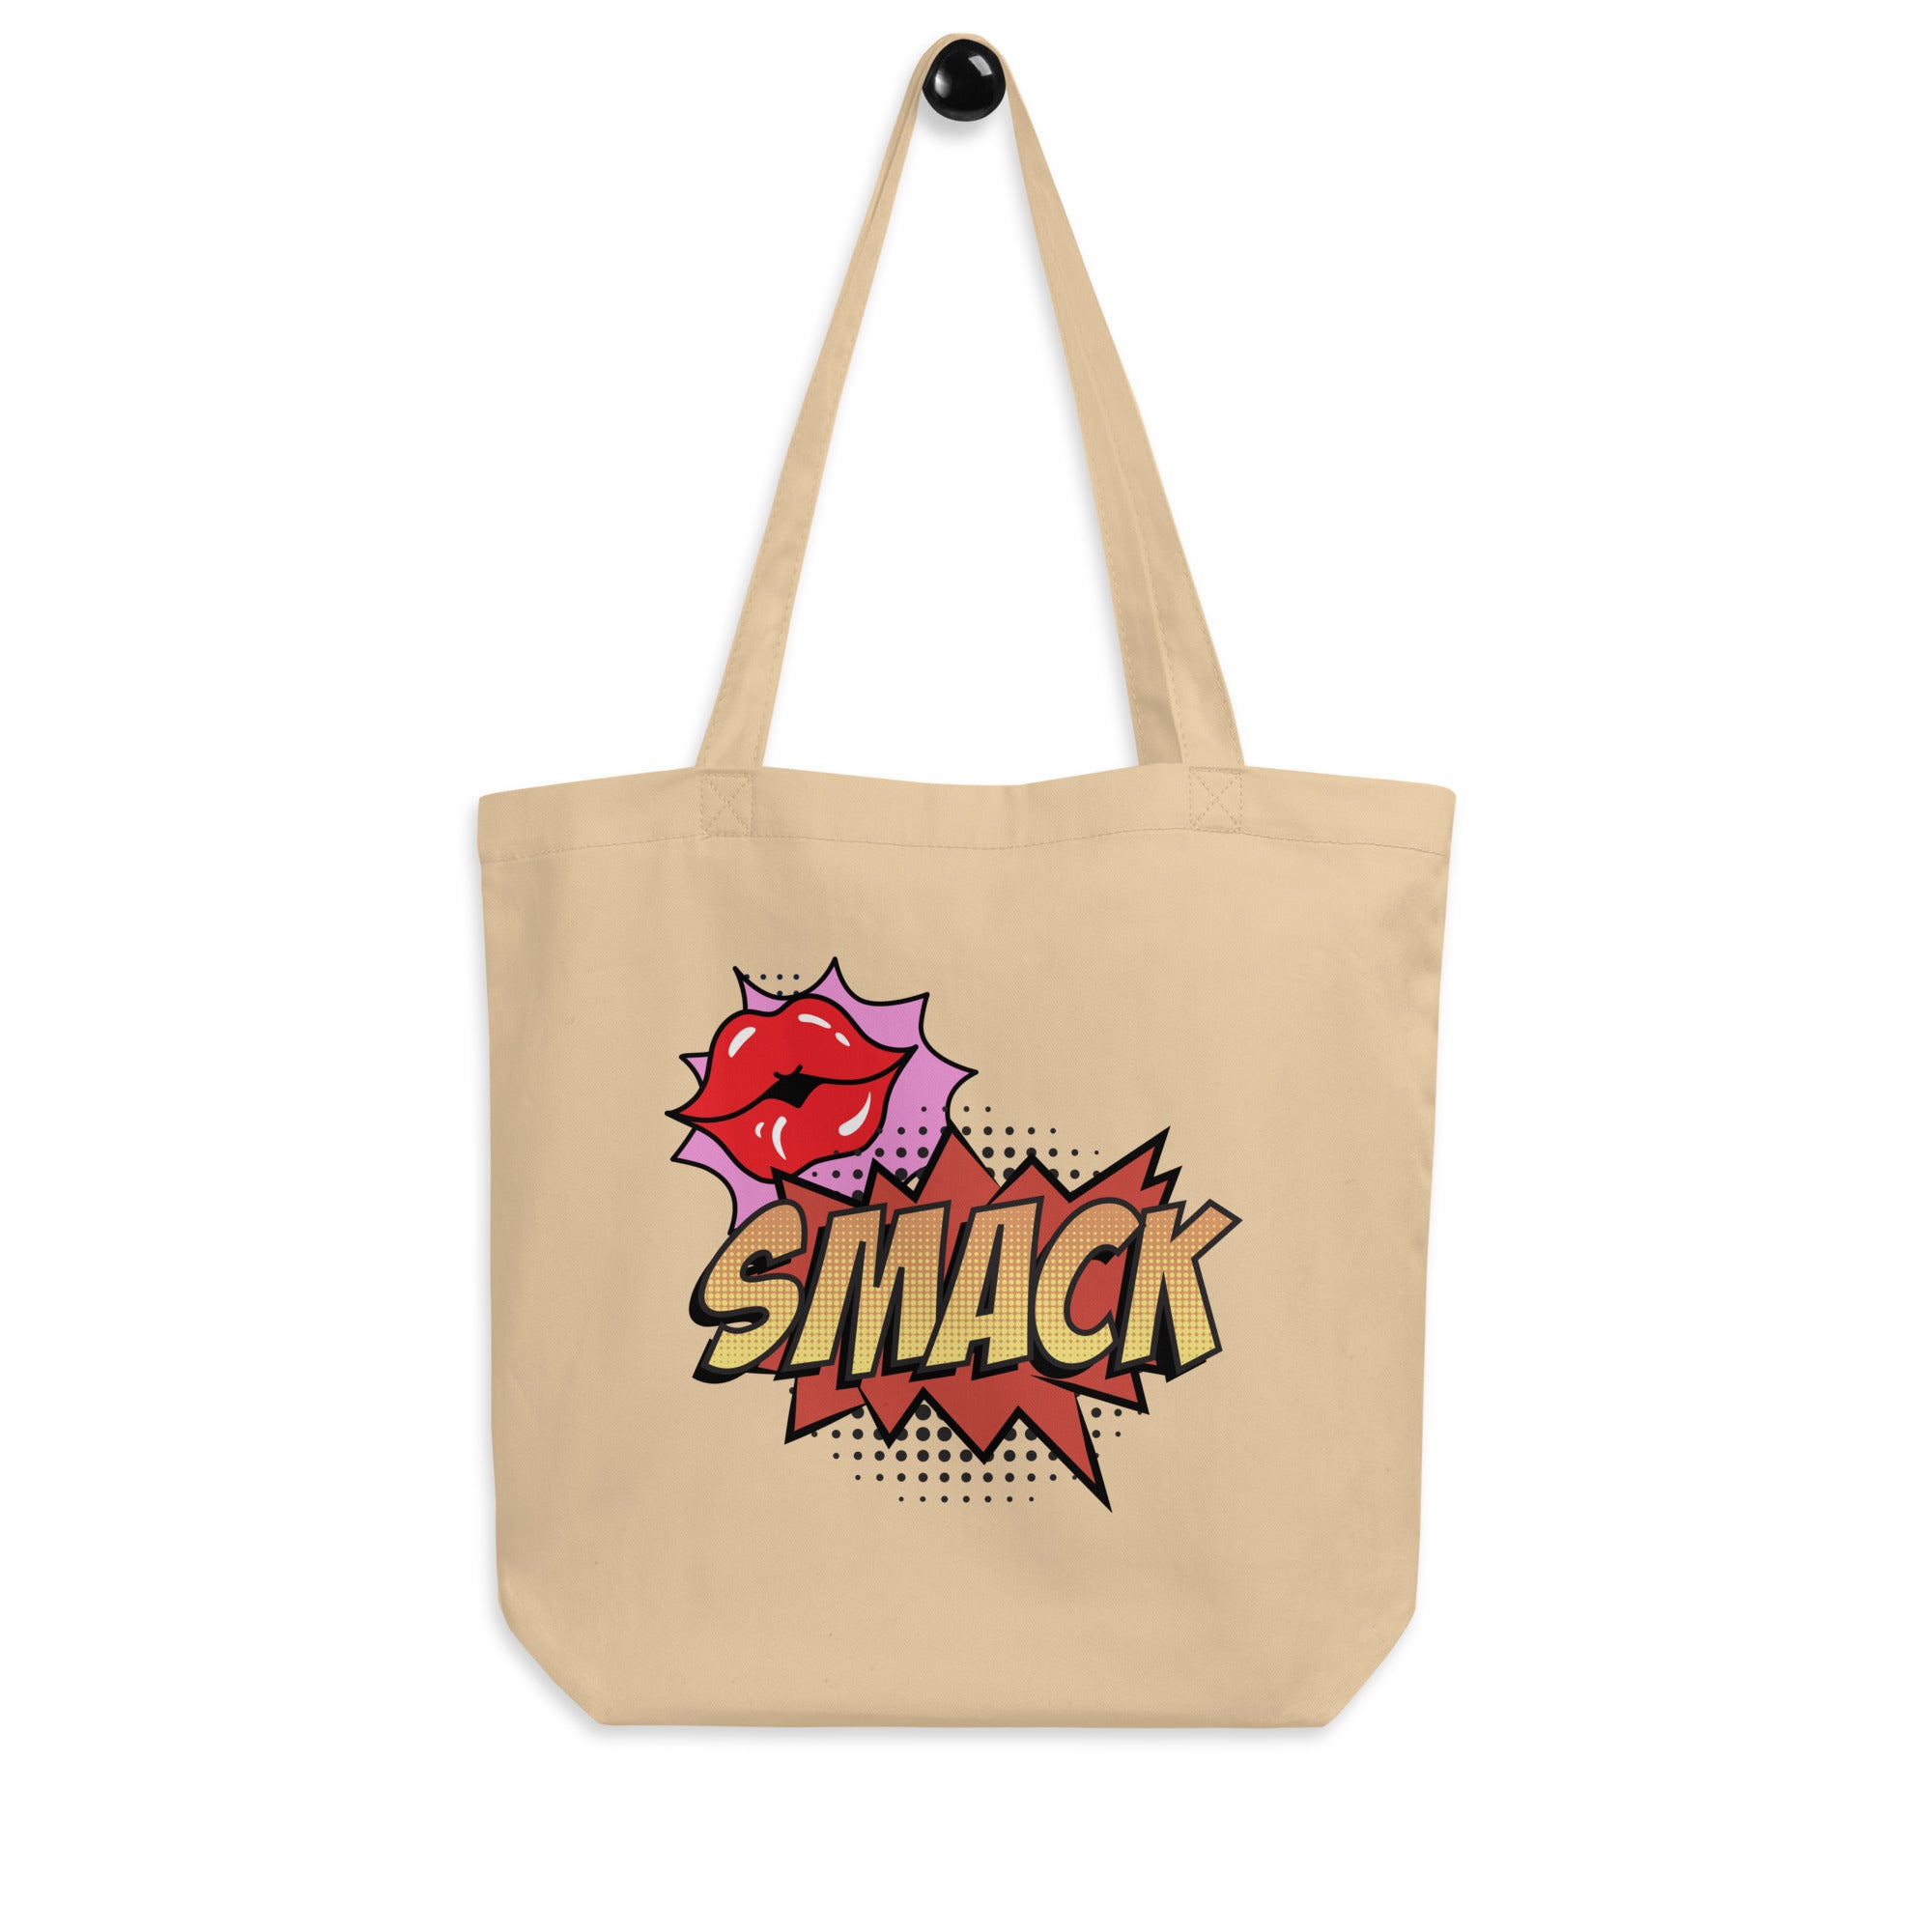 Eco Tote Bag, Smack Kiss Back, School Bag, Gift, Weekend, Travel